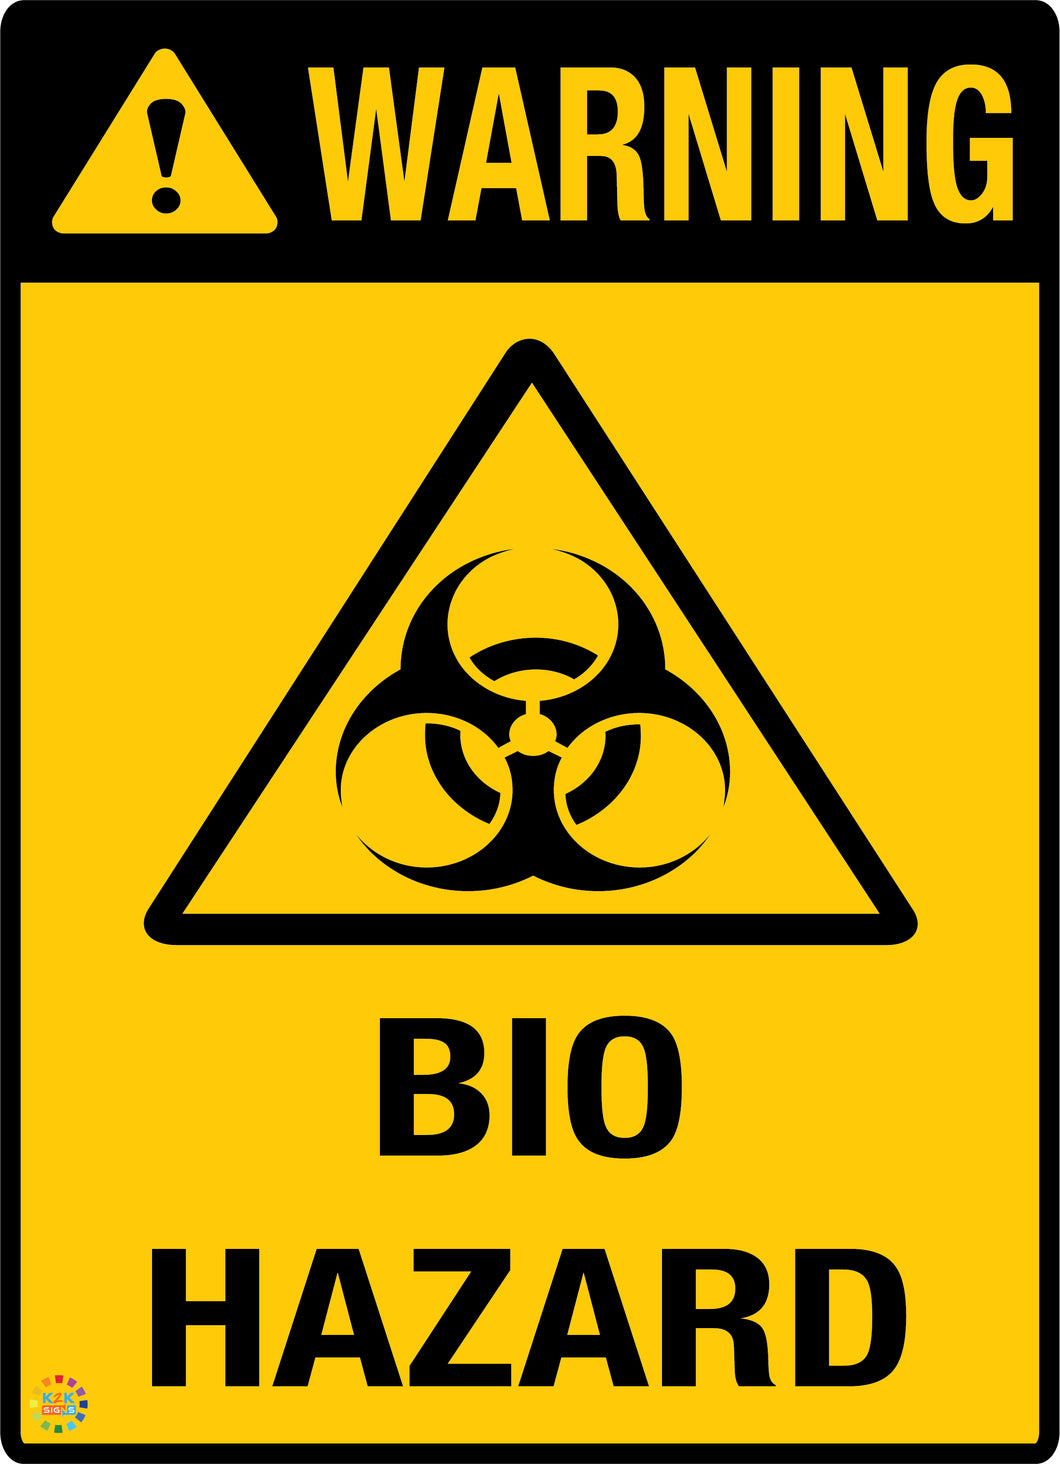 Warning - Biohazard Sign